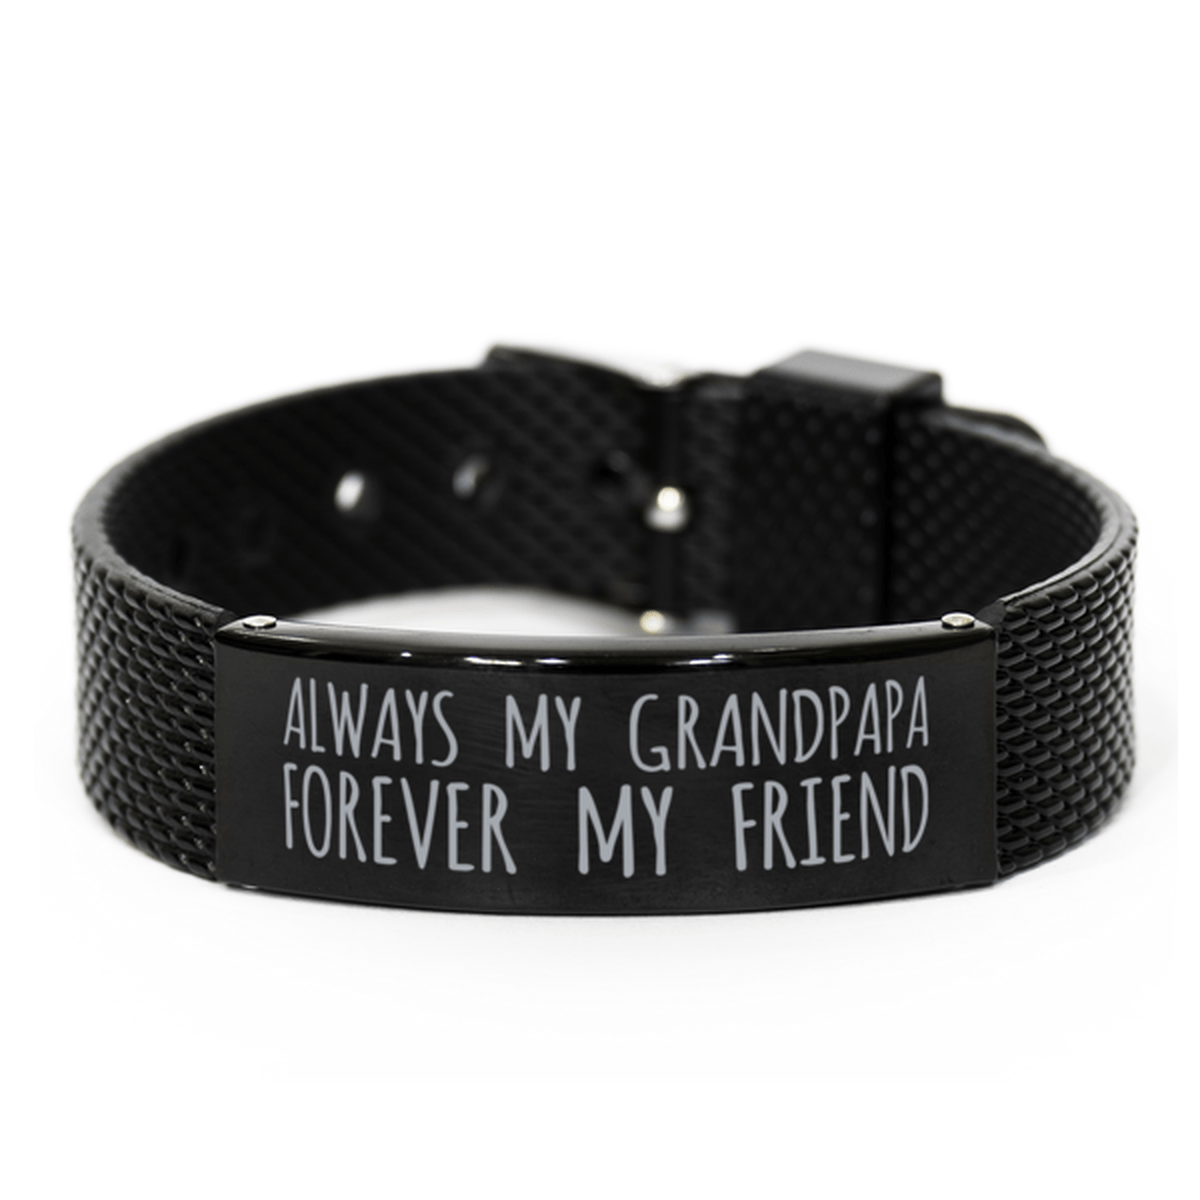 Inspirational Grandpapa Black Shark Mesh Bracelet, Always My Grandpapa Forever My Friend, Best Birthday Gifts for Family Friends